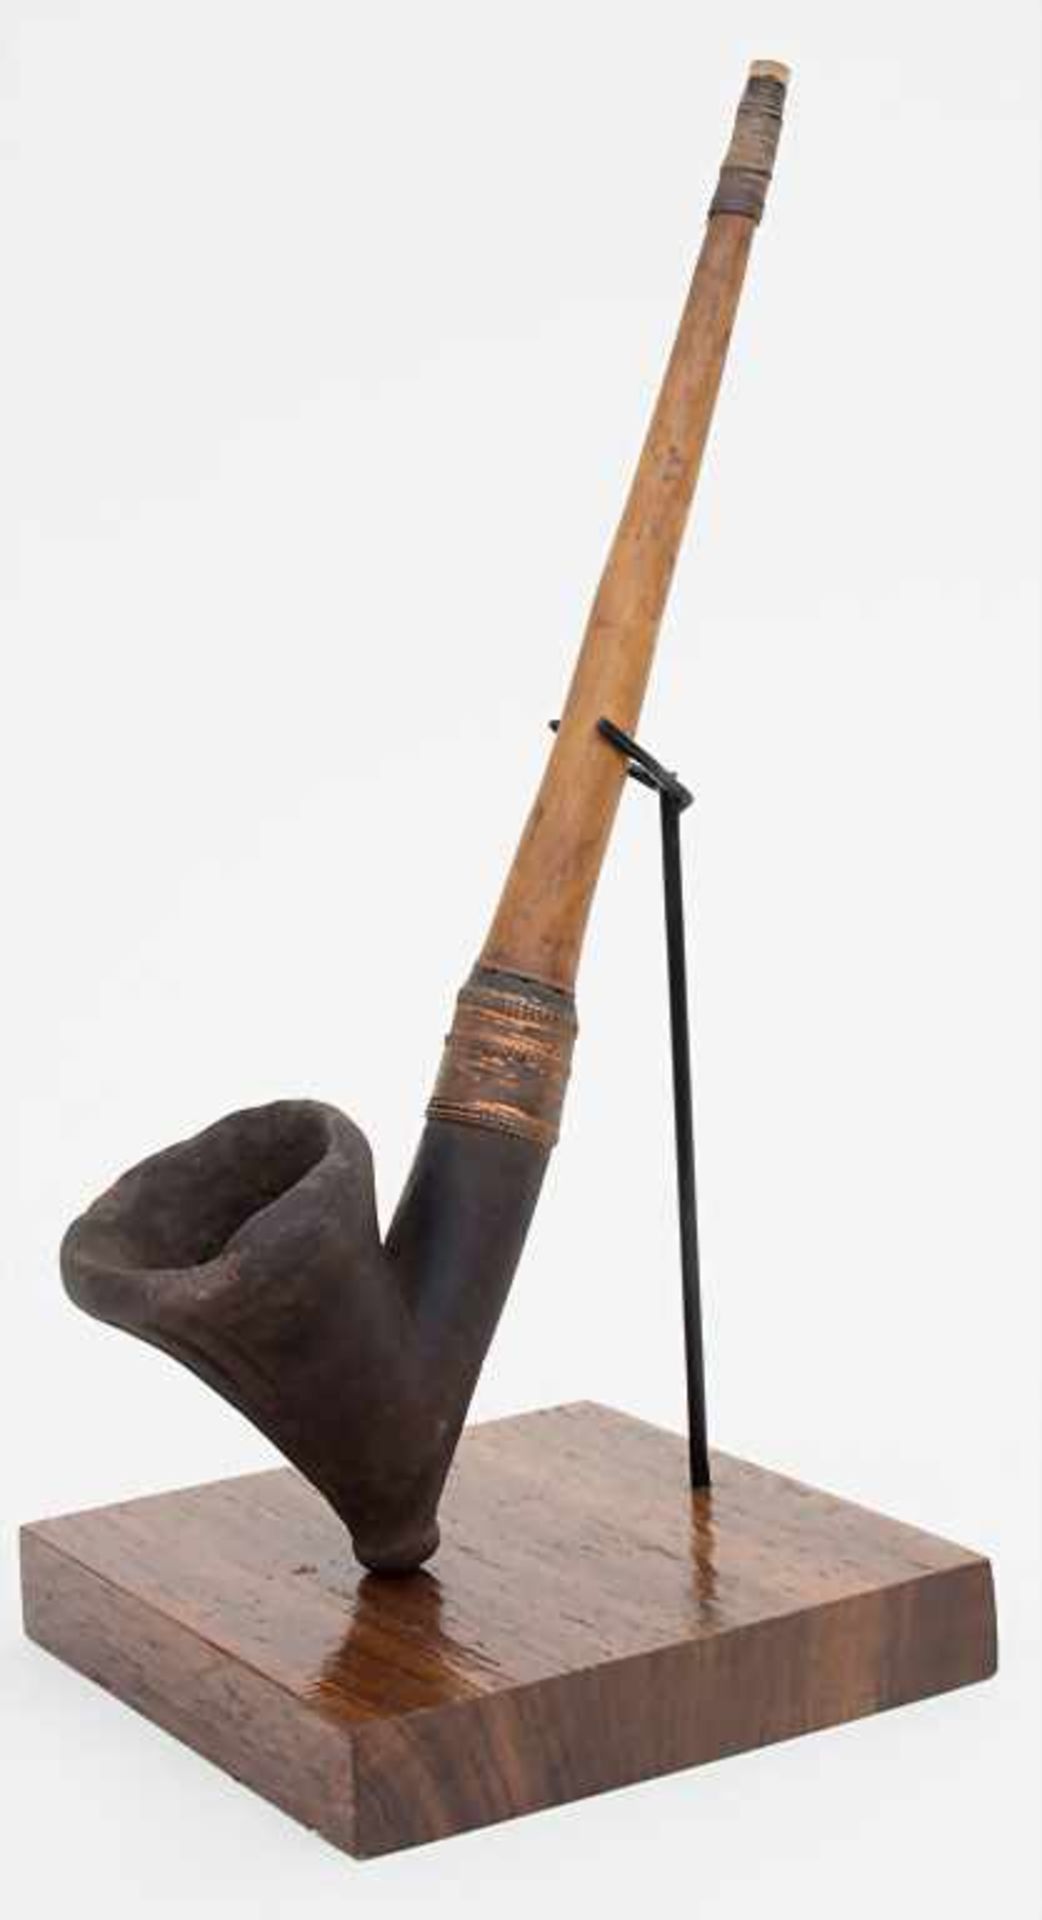 Zeremonialpfeife / A ceremonial whistle, Bamileke, KamerunMaterial: Holz, Keramik, Kupferdraht,